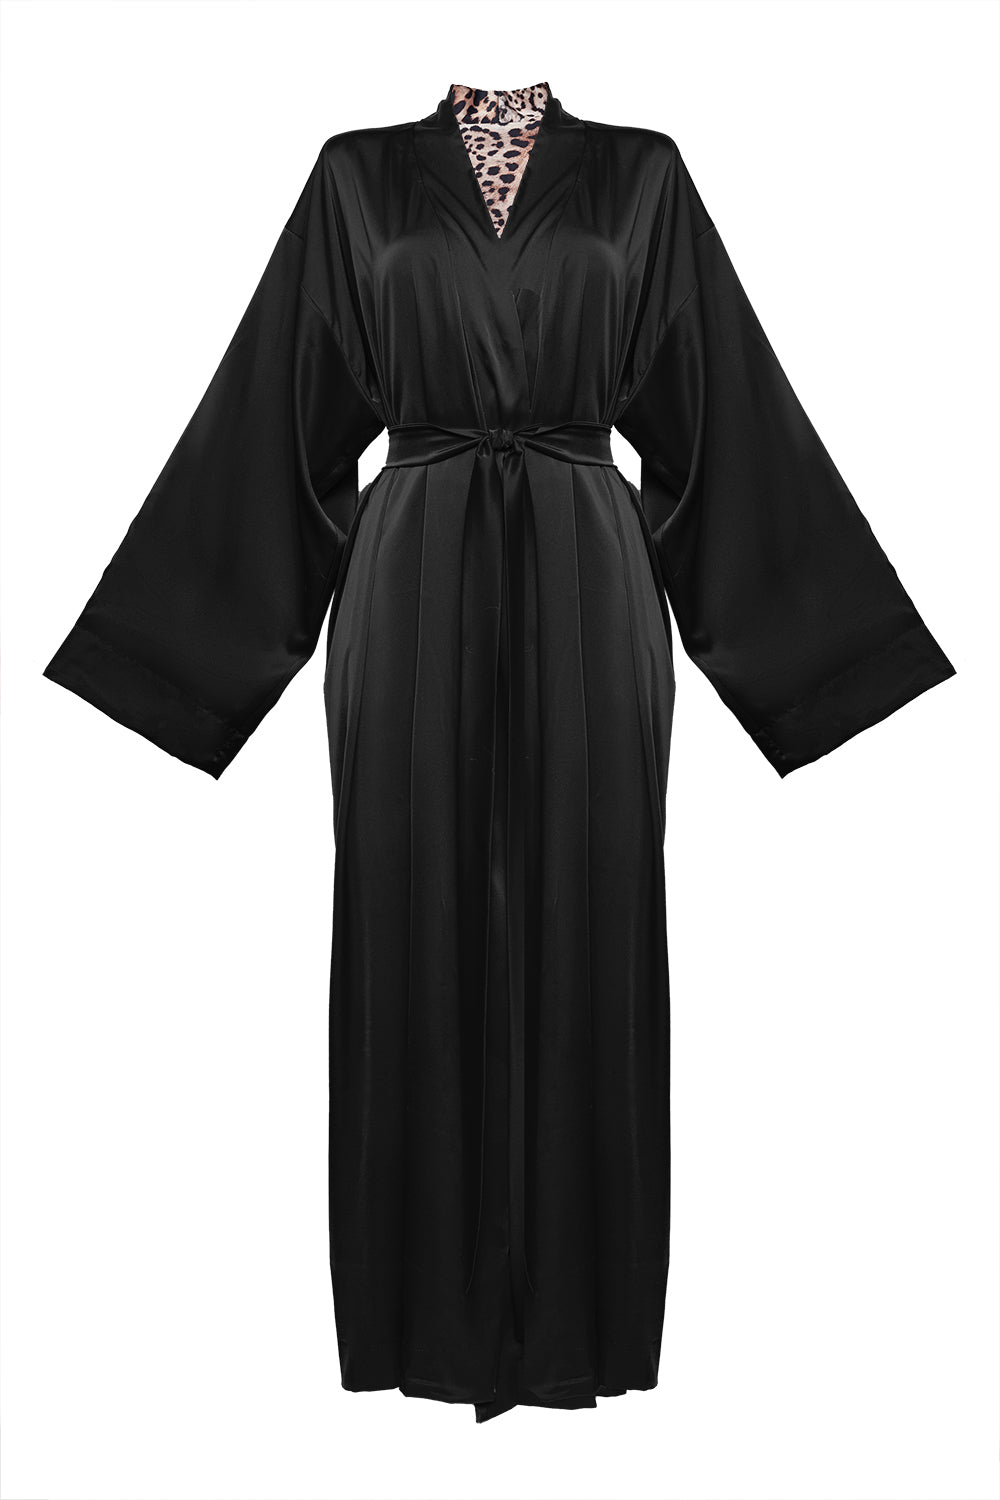 Kasumi Leo black kimono robe by Komarova